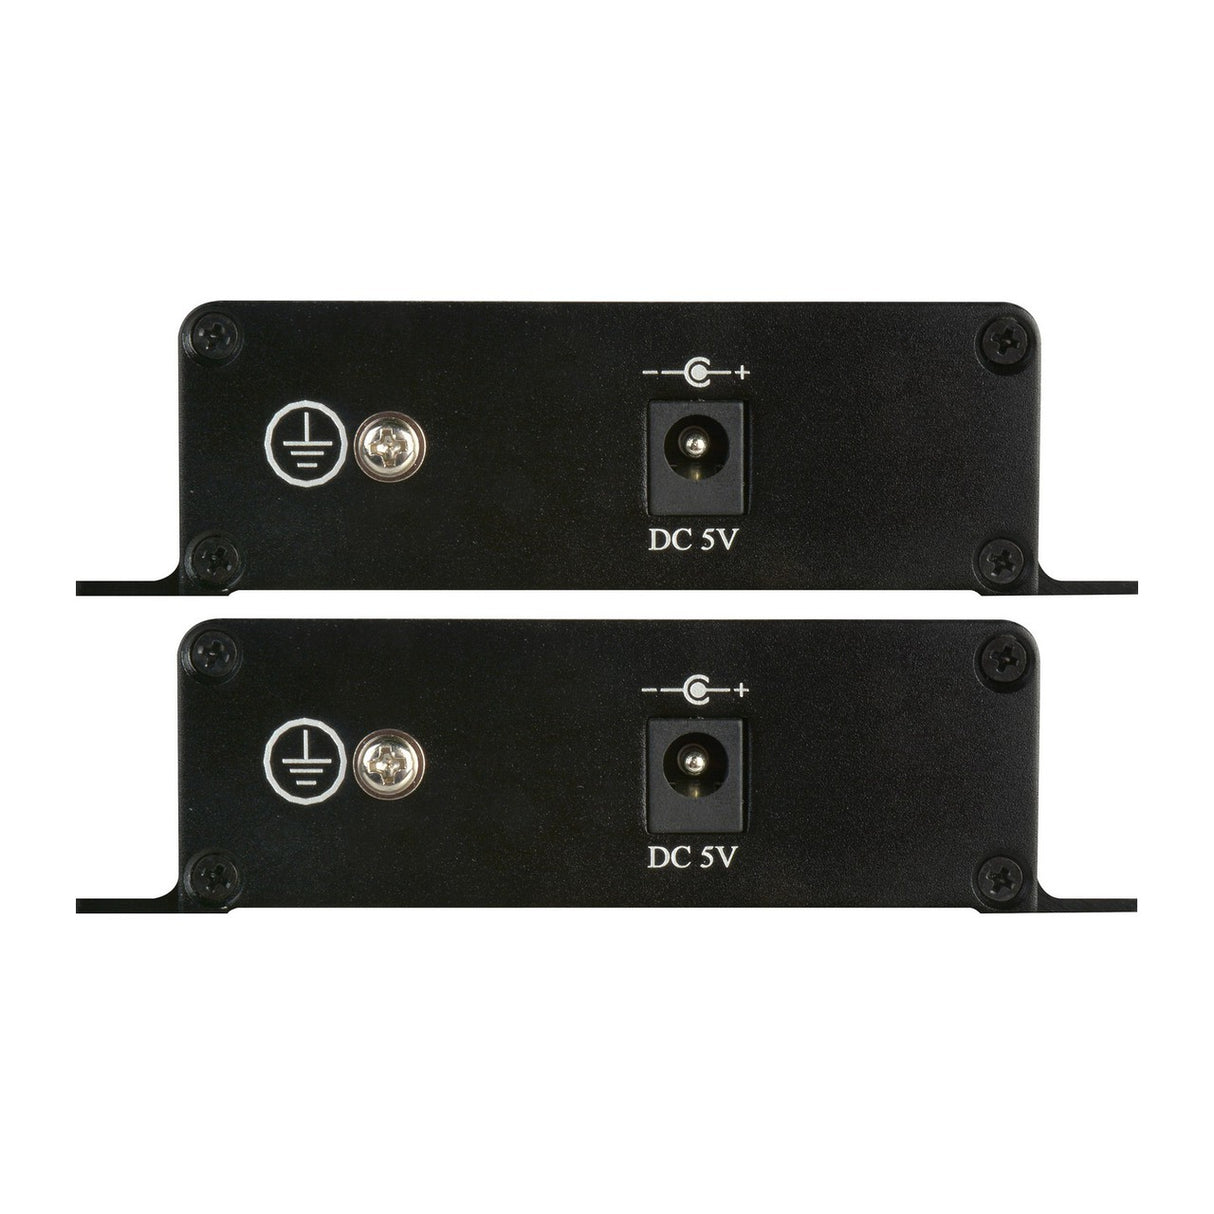 Sescom SES-FA8UB | 8 Channel Unbalanced Phoenix Style Connectors Audio Optical Fiber Extender Kit